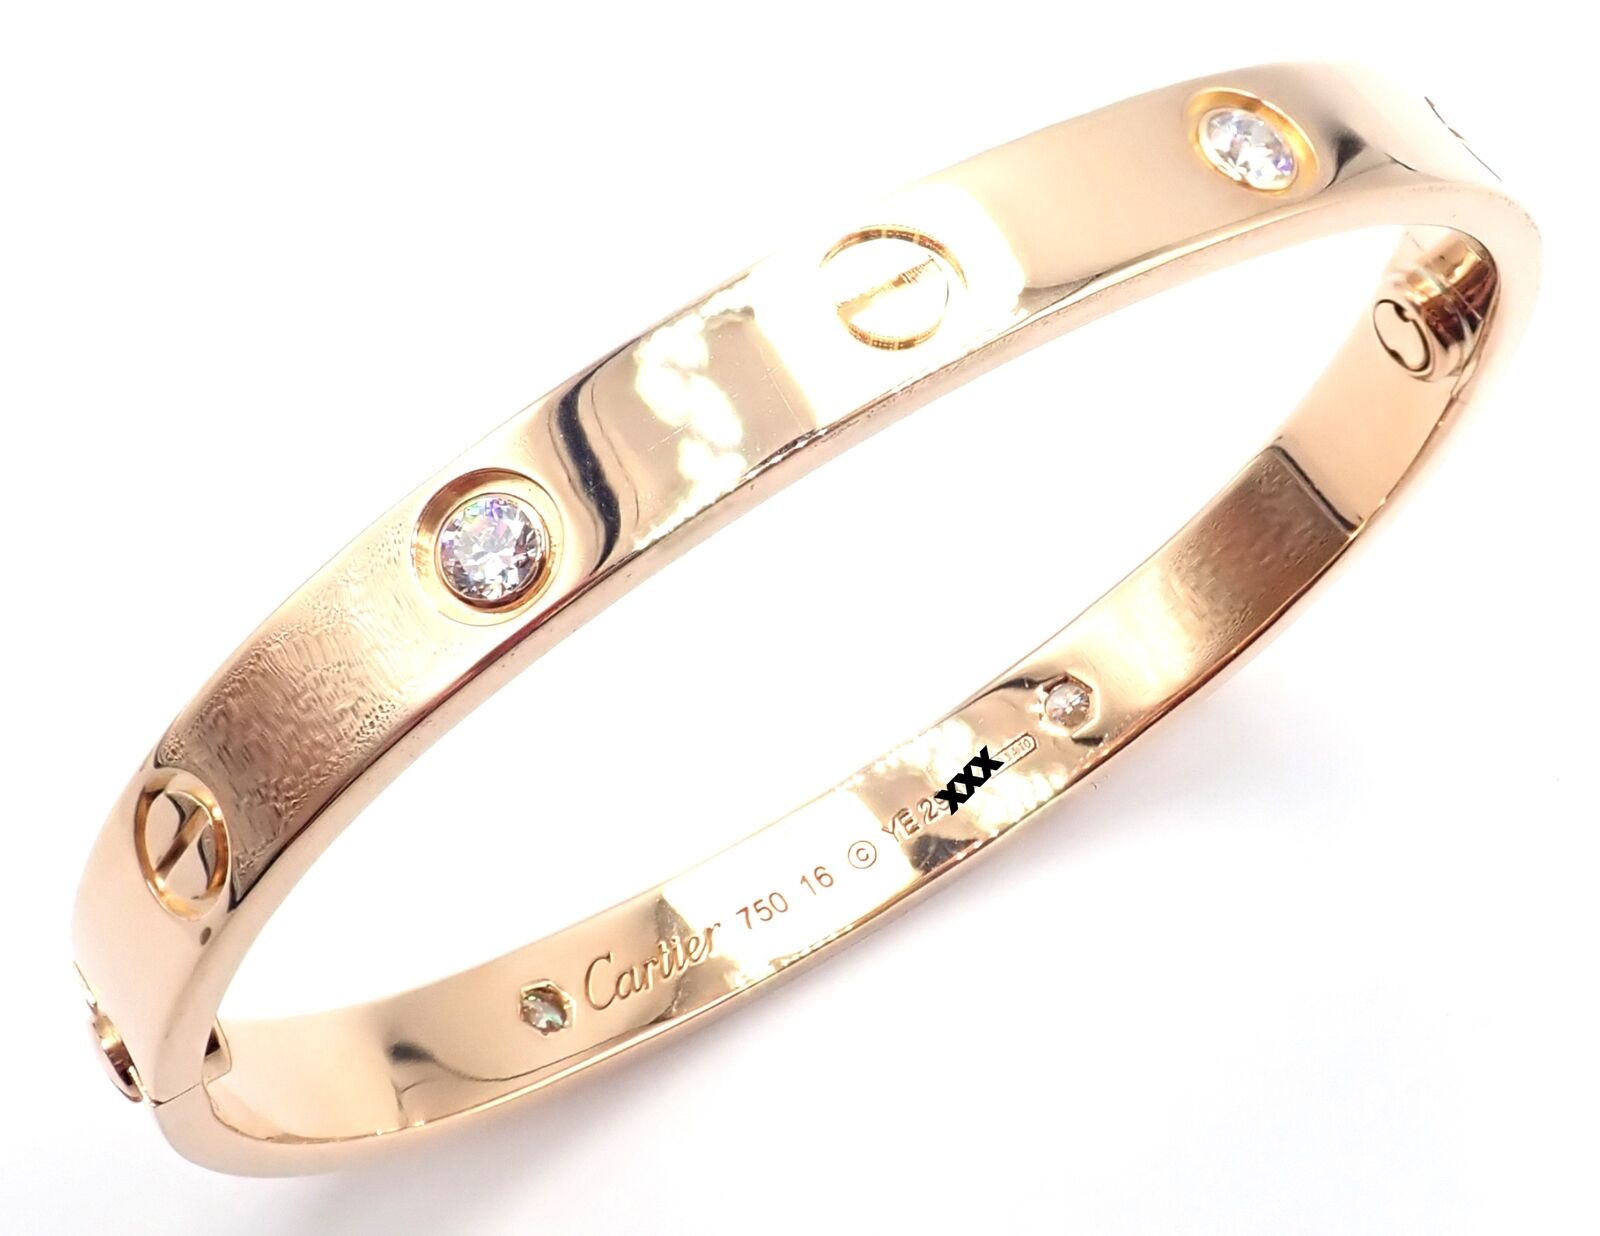 CARTIER LOVE 18ct rose-gold bracelet